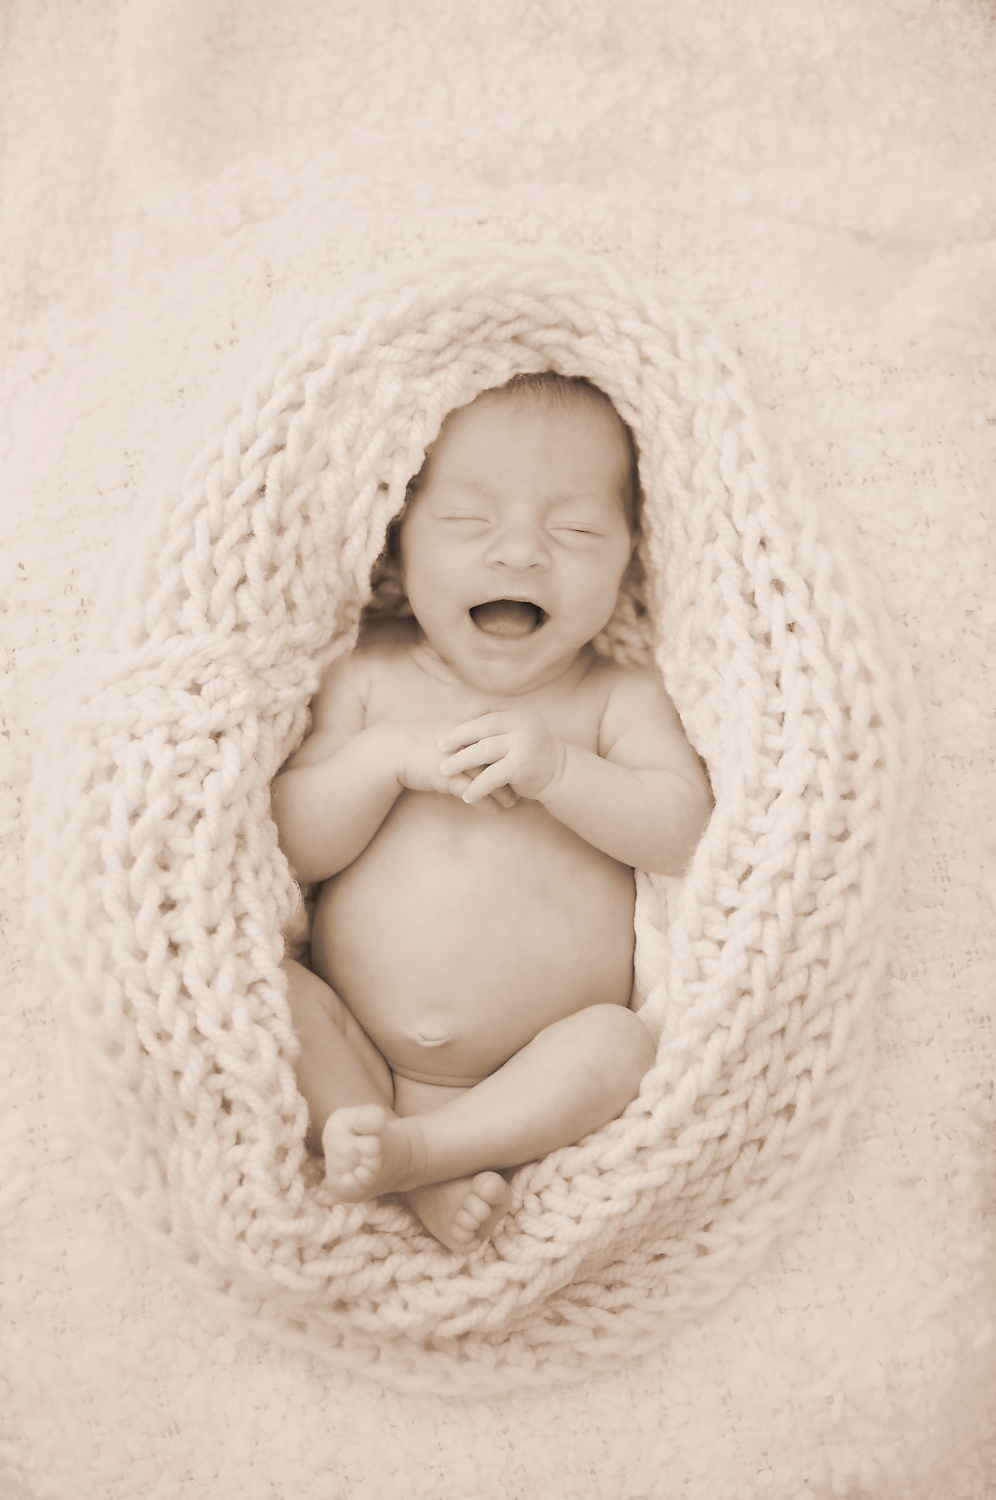 max_feaBabyshooting Fotoshooting Newborn Neugeborenenfotografie Dresdenrtig_40_klein